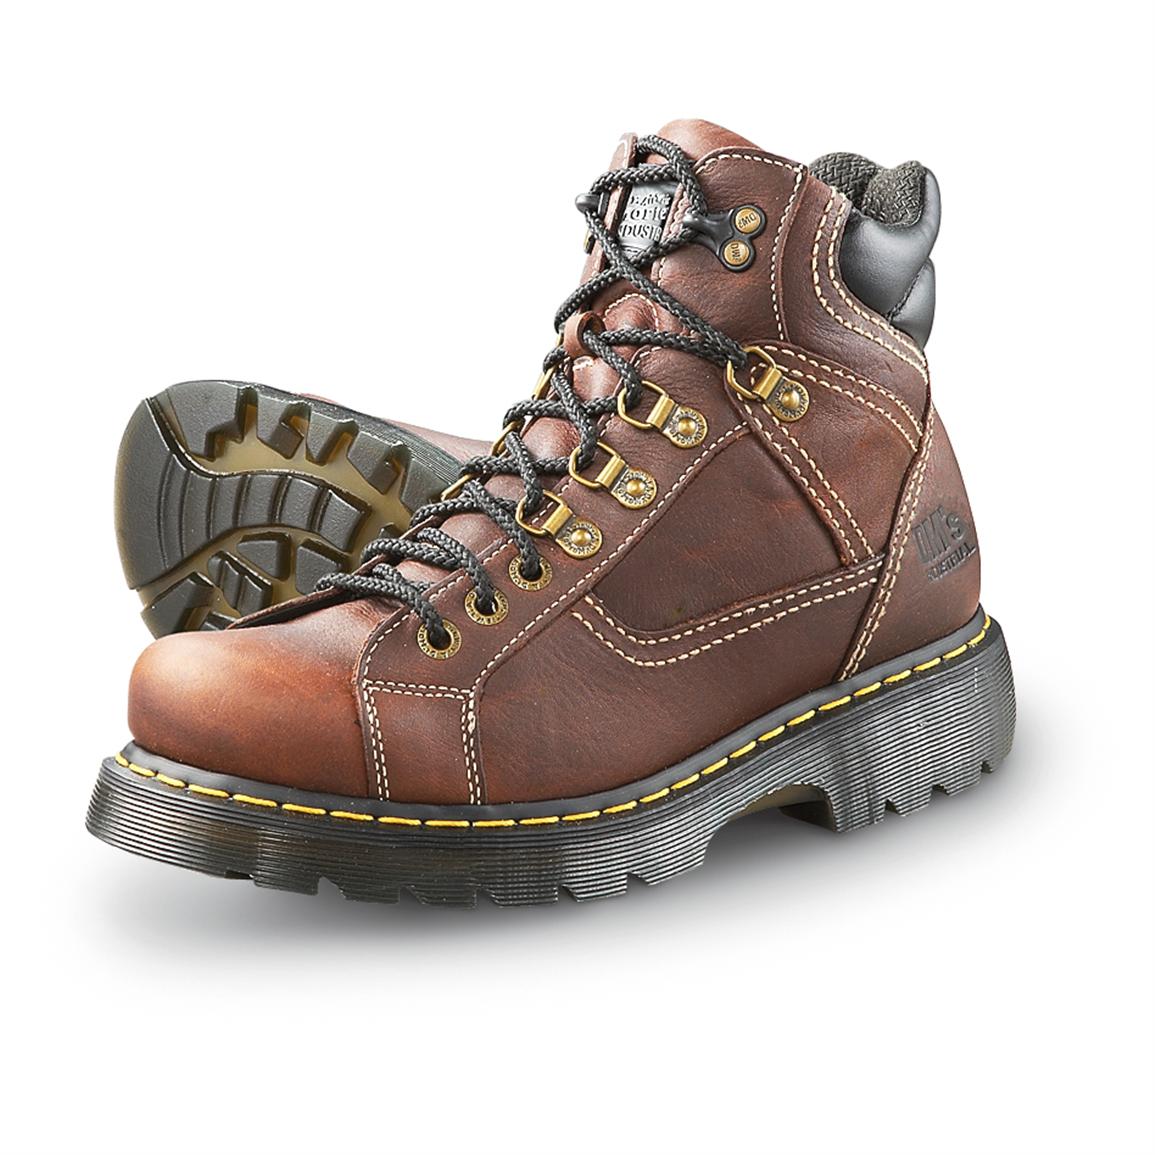 Men's Dr. Martens™ Industrial Boots, Teak - 177662, Work Boots at ...